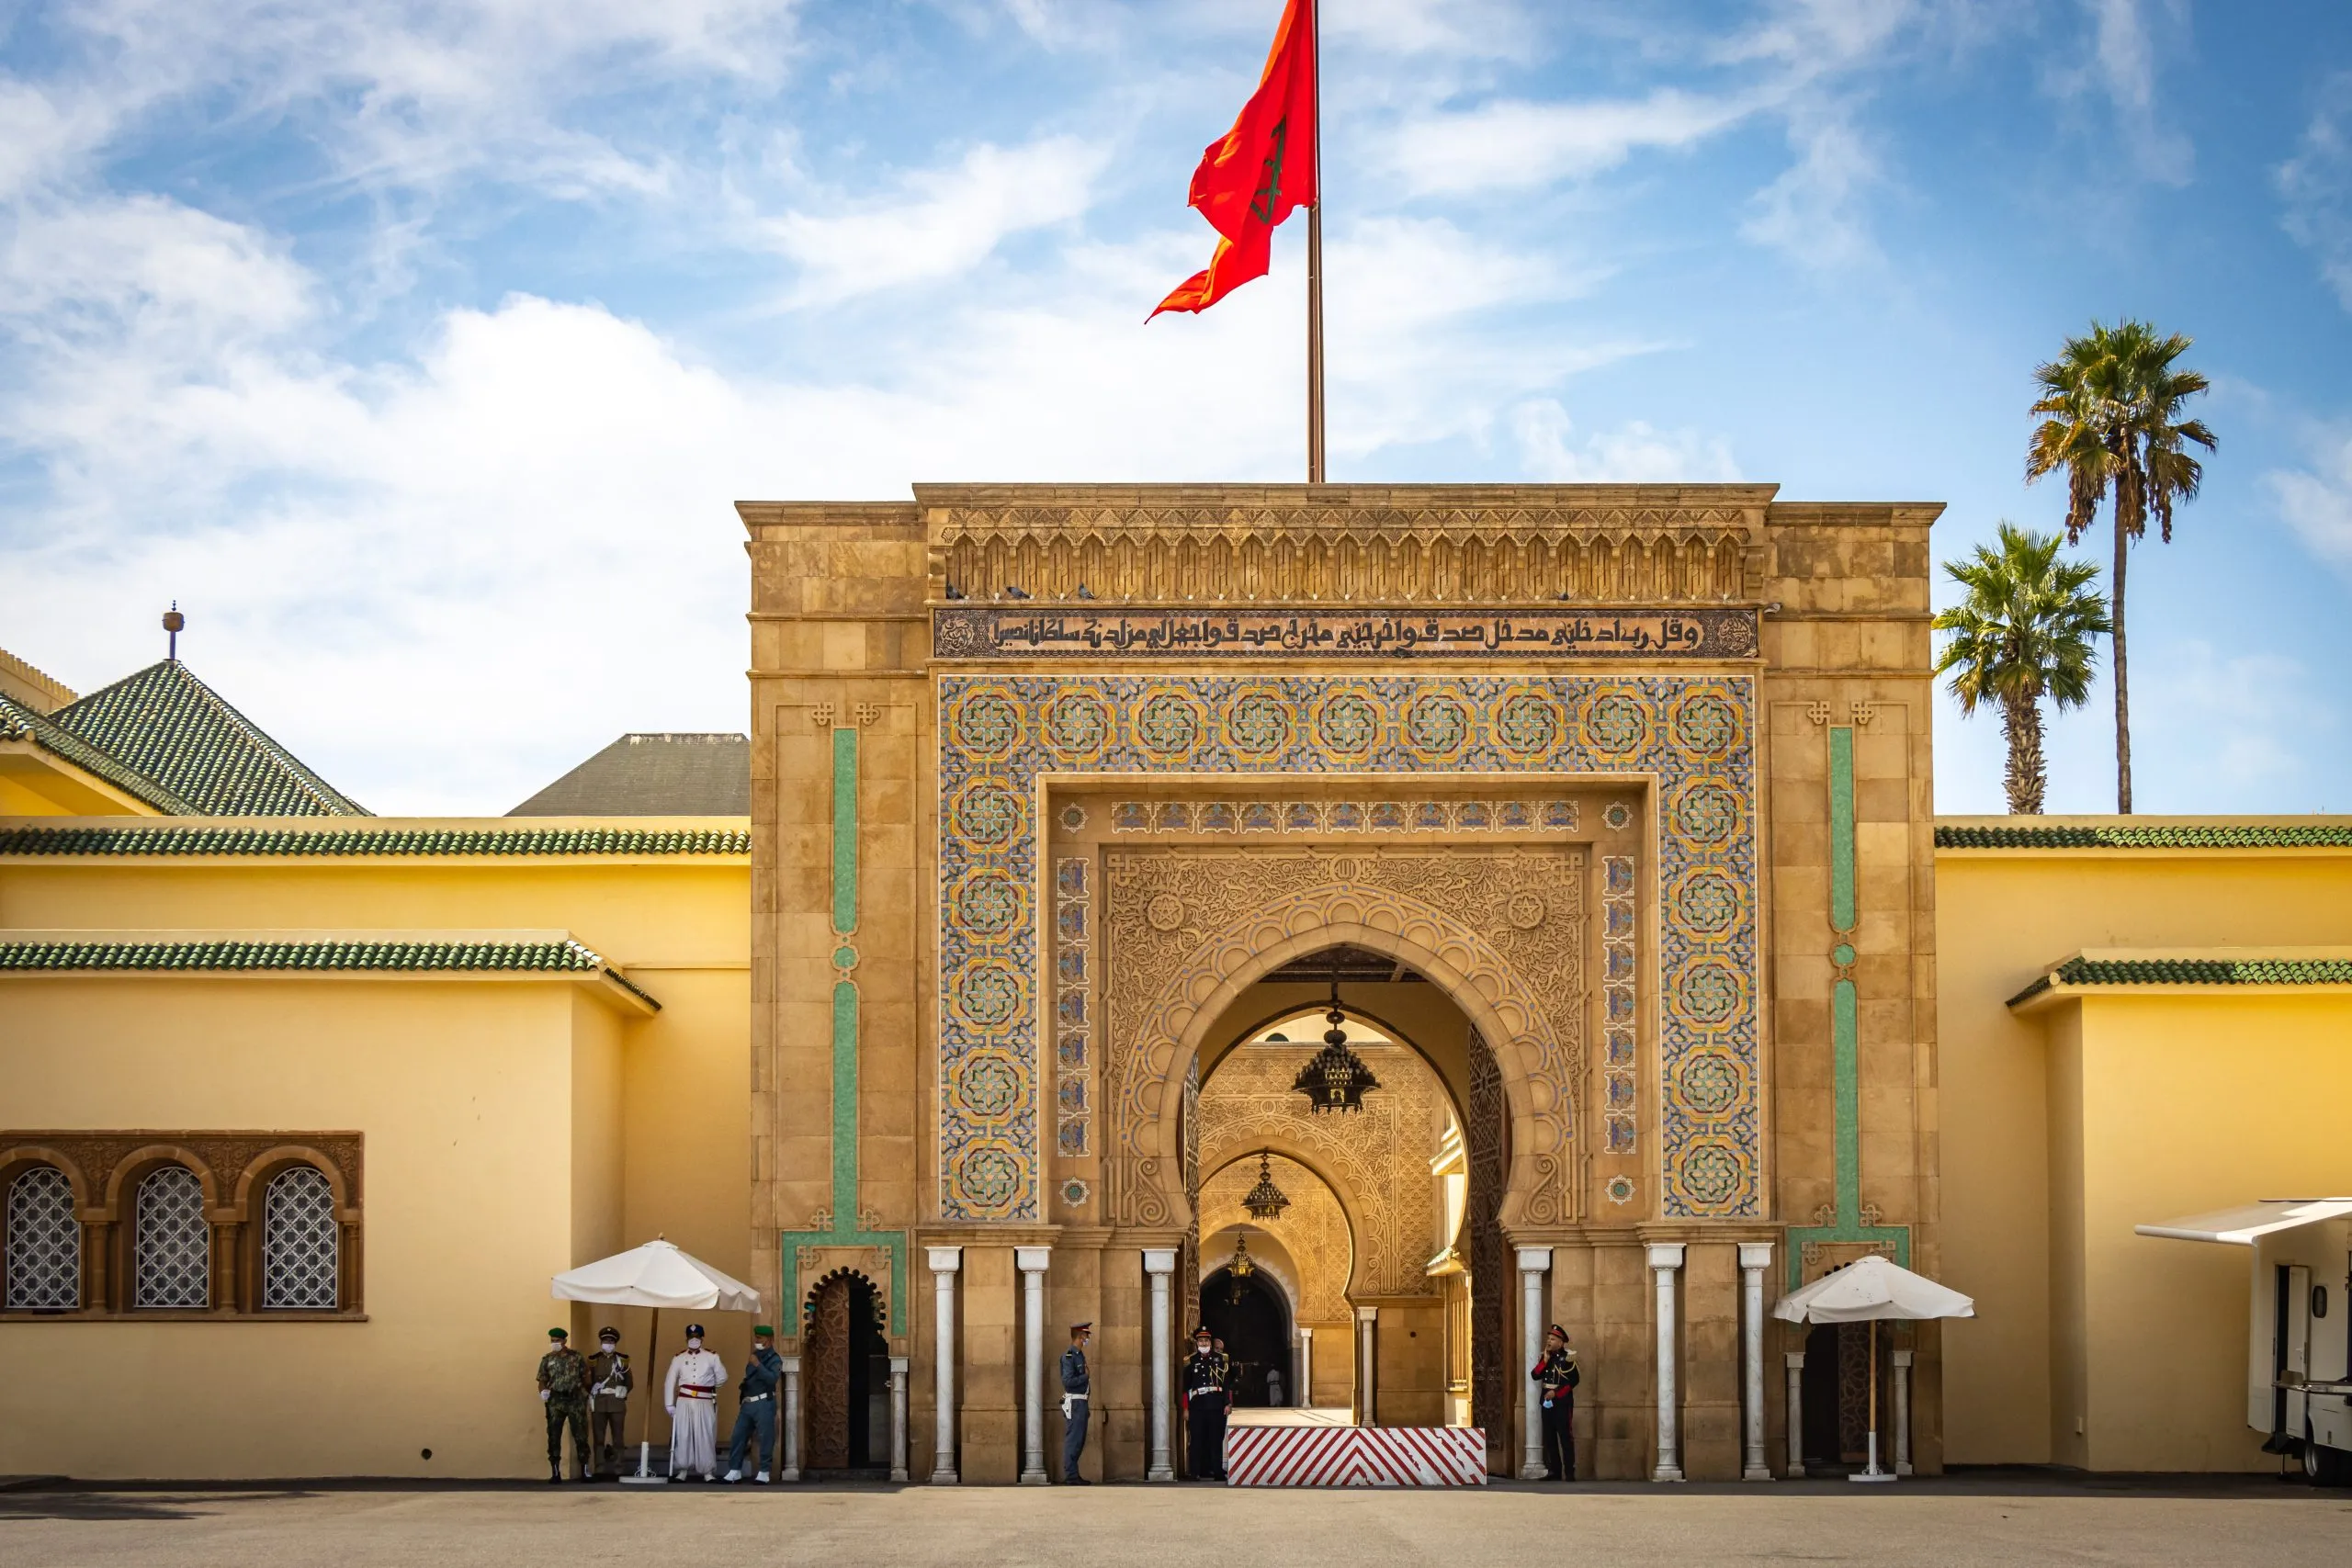 entrance to royal palace, rabat, morocco, north africa